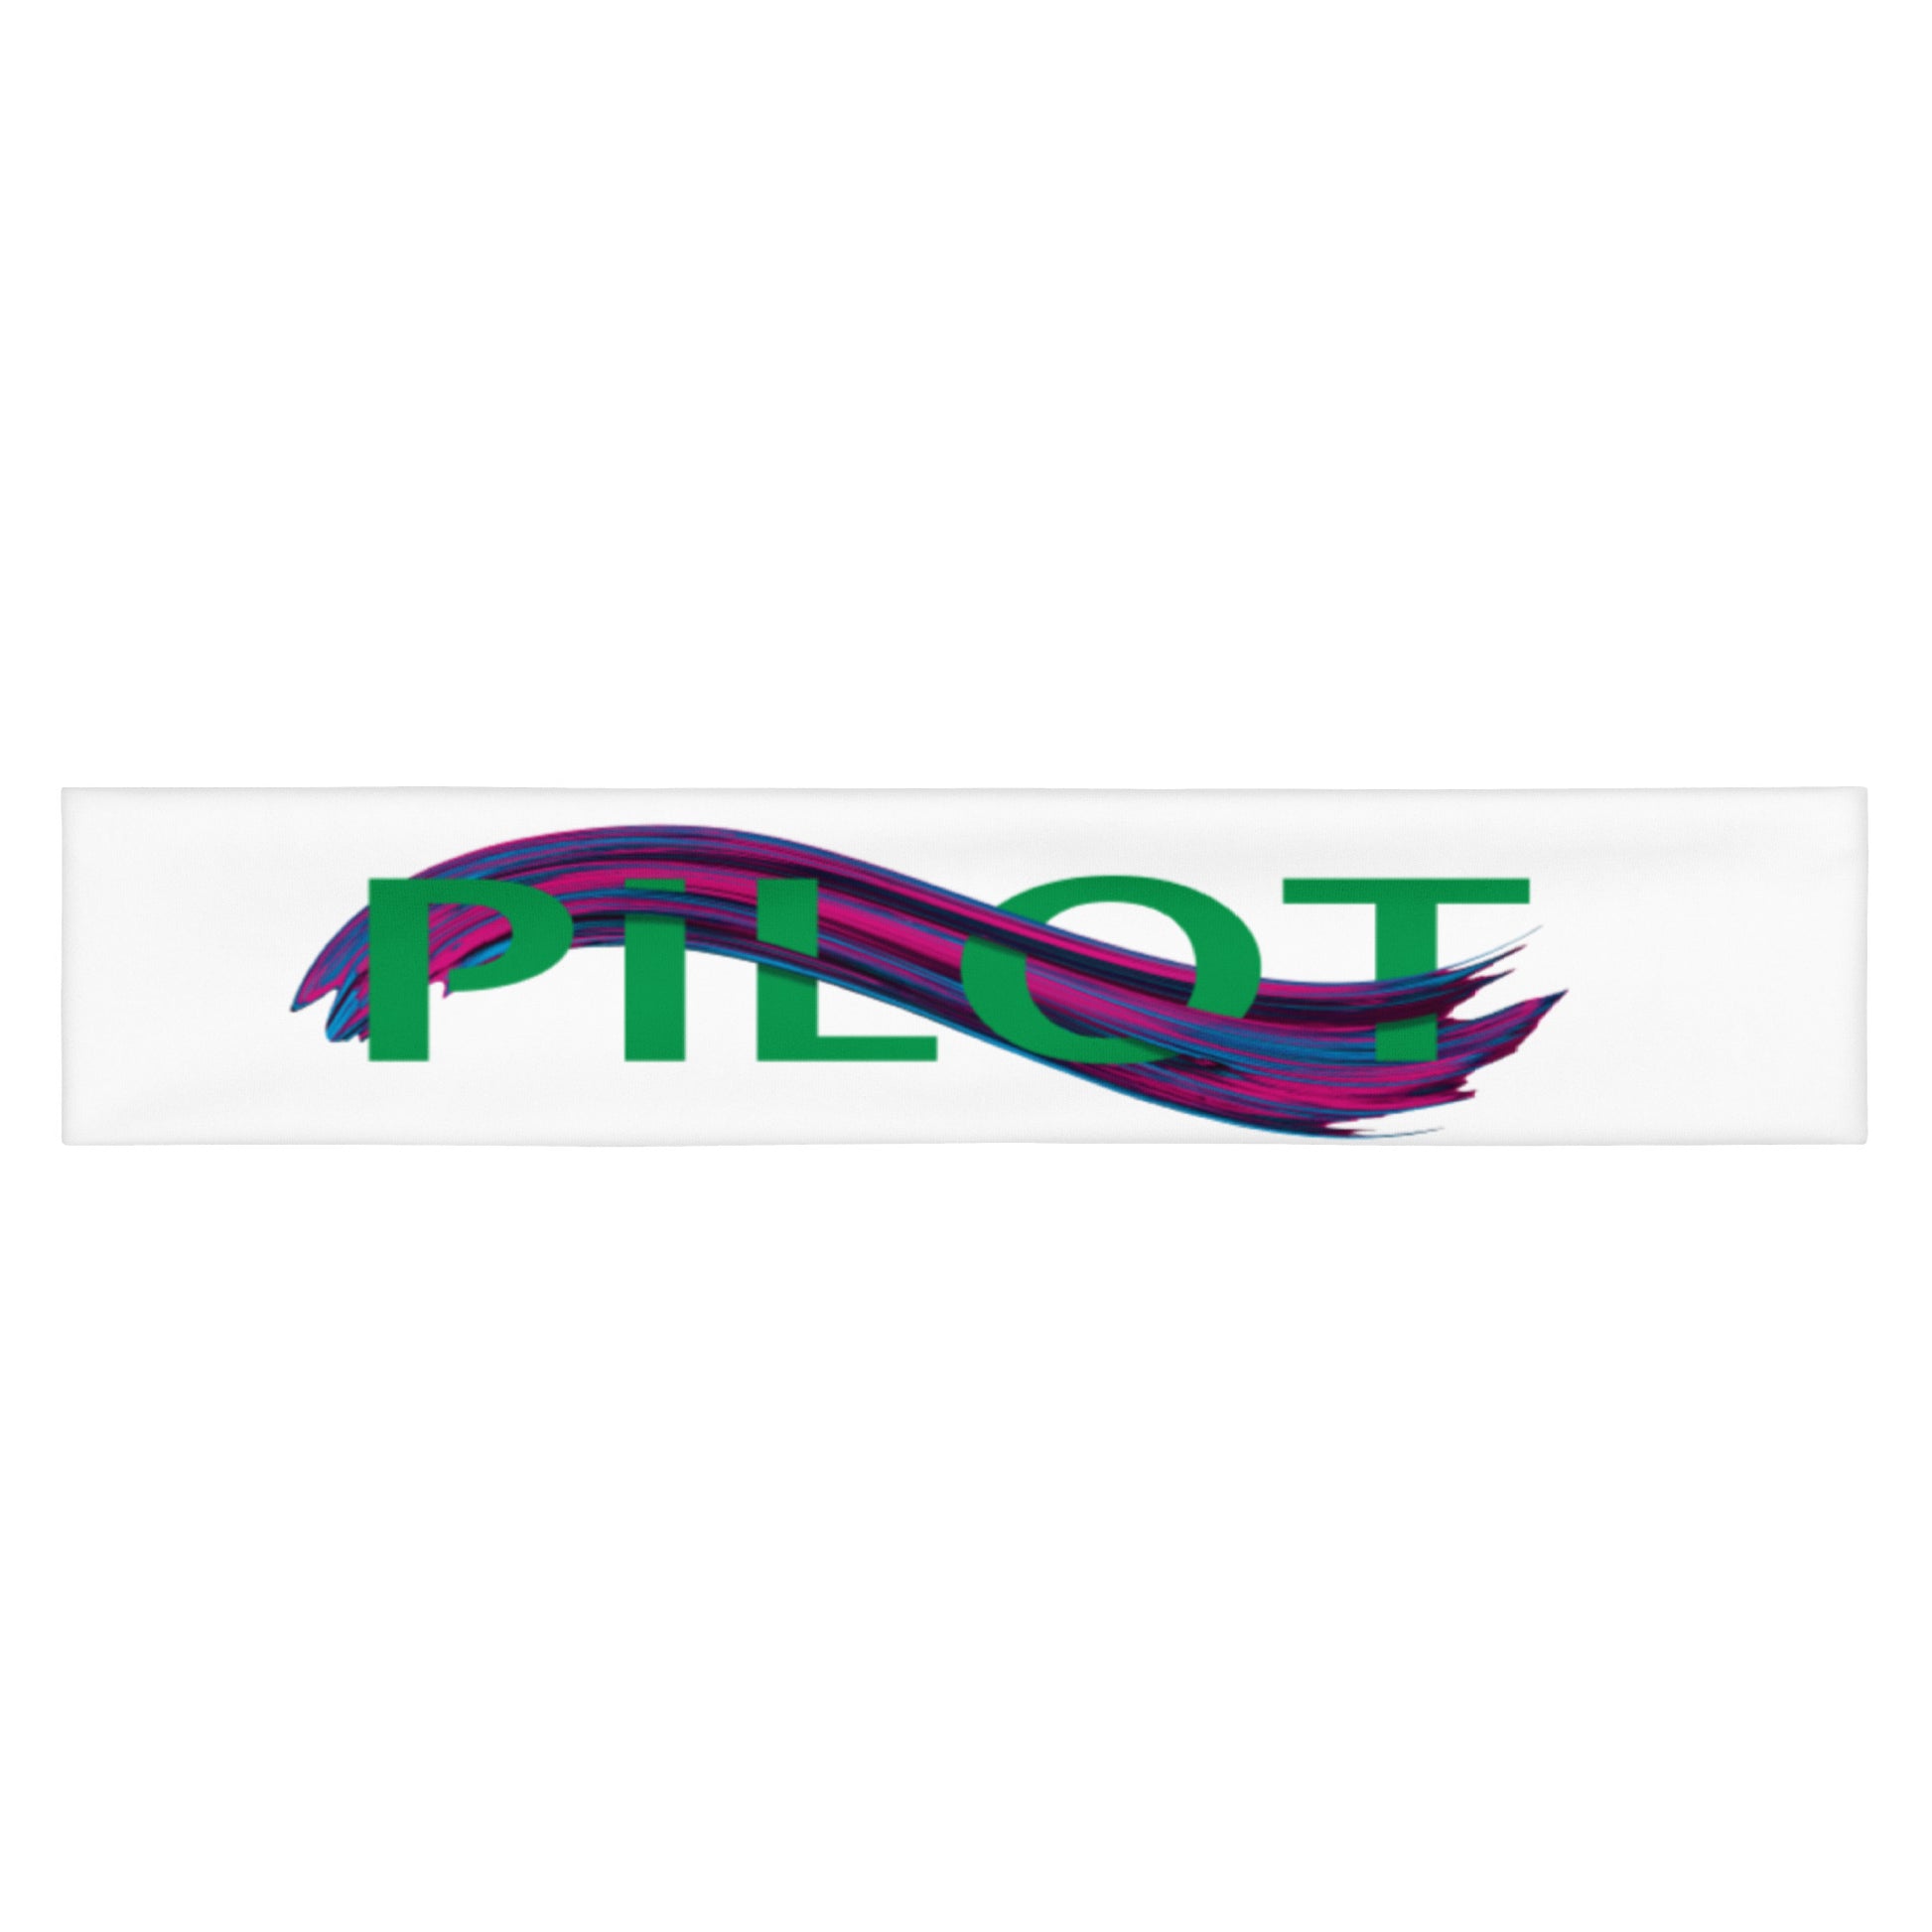 Pilot - headband (green/purple)